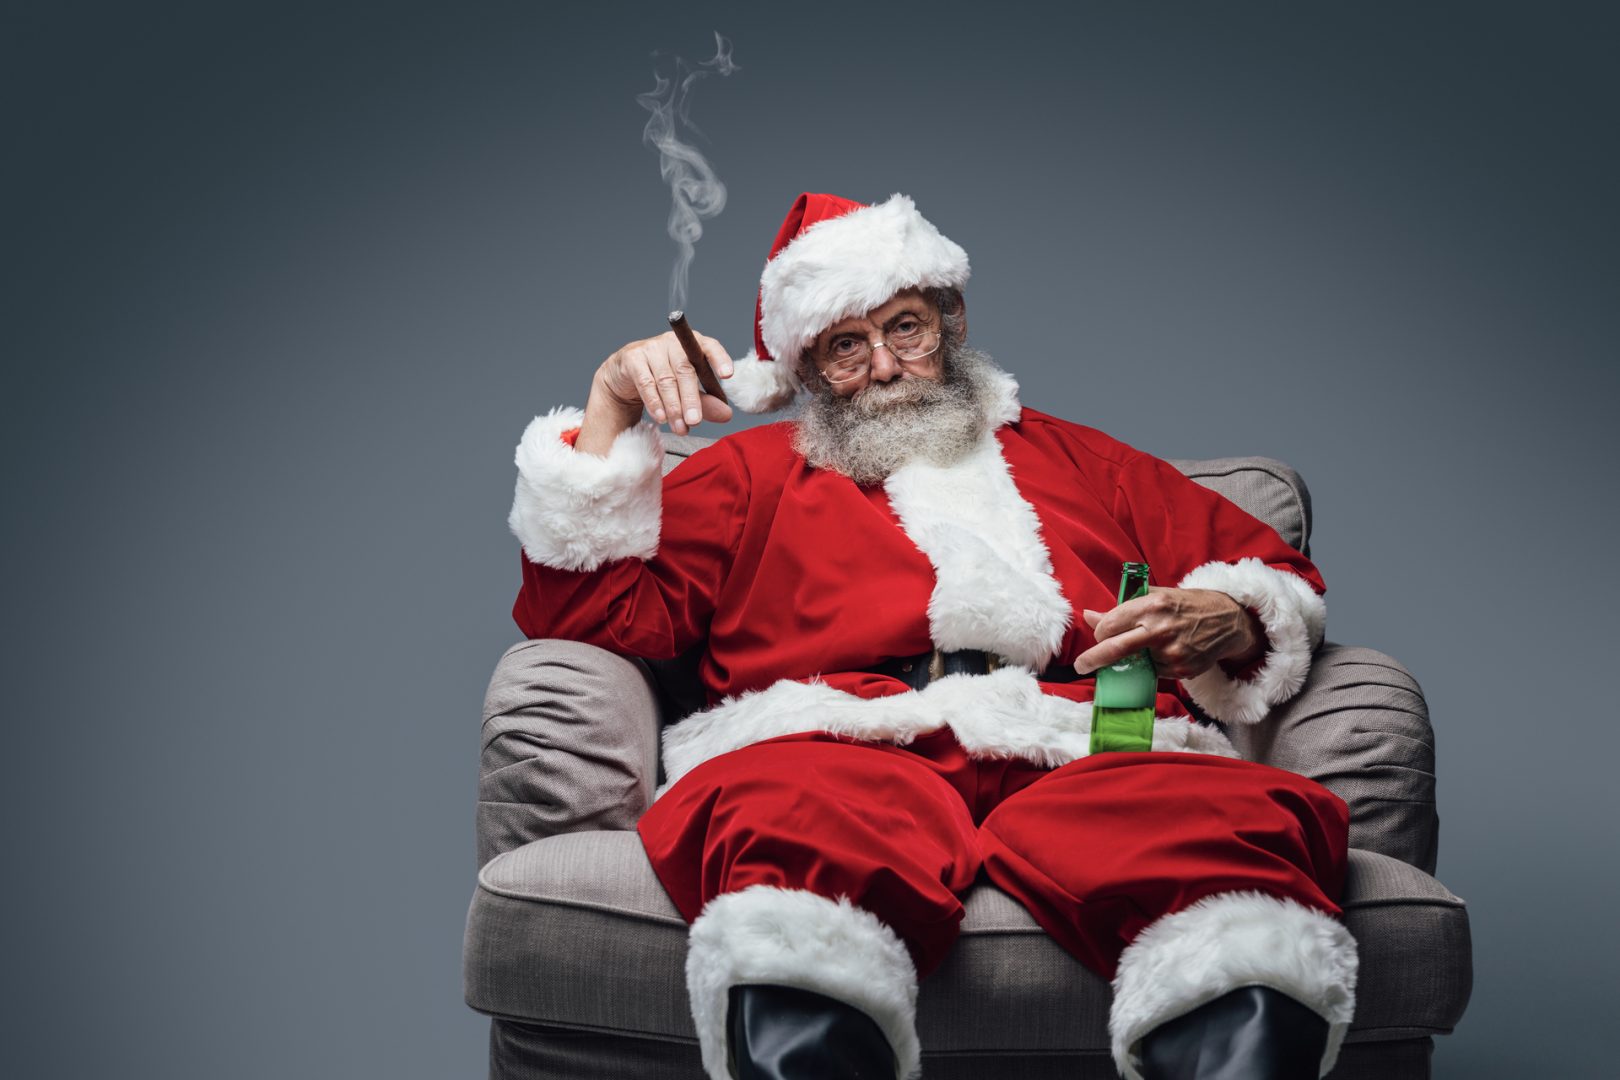 Bad Santa celebrating Christmas at home alone, he is smoking a cigar and drinking beer